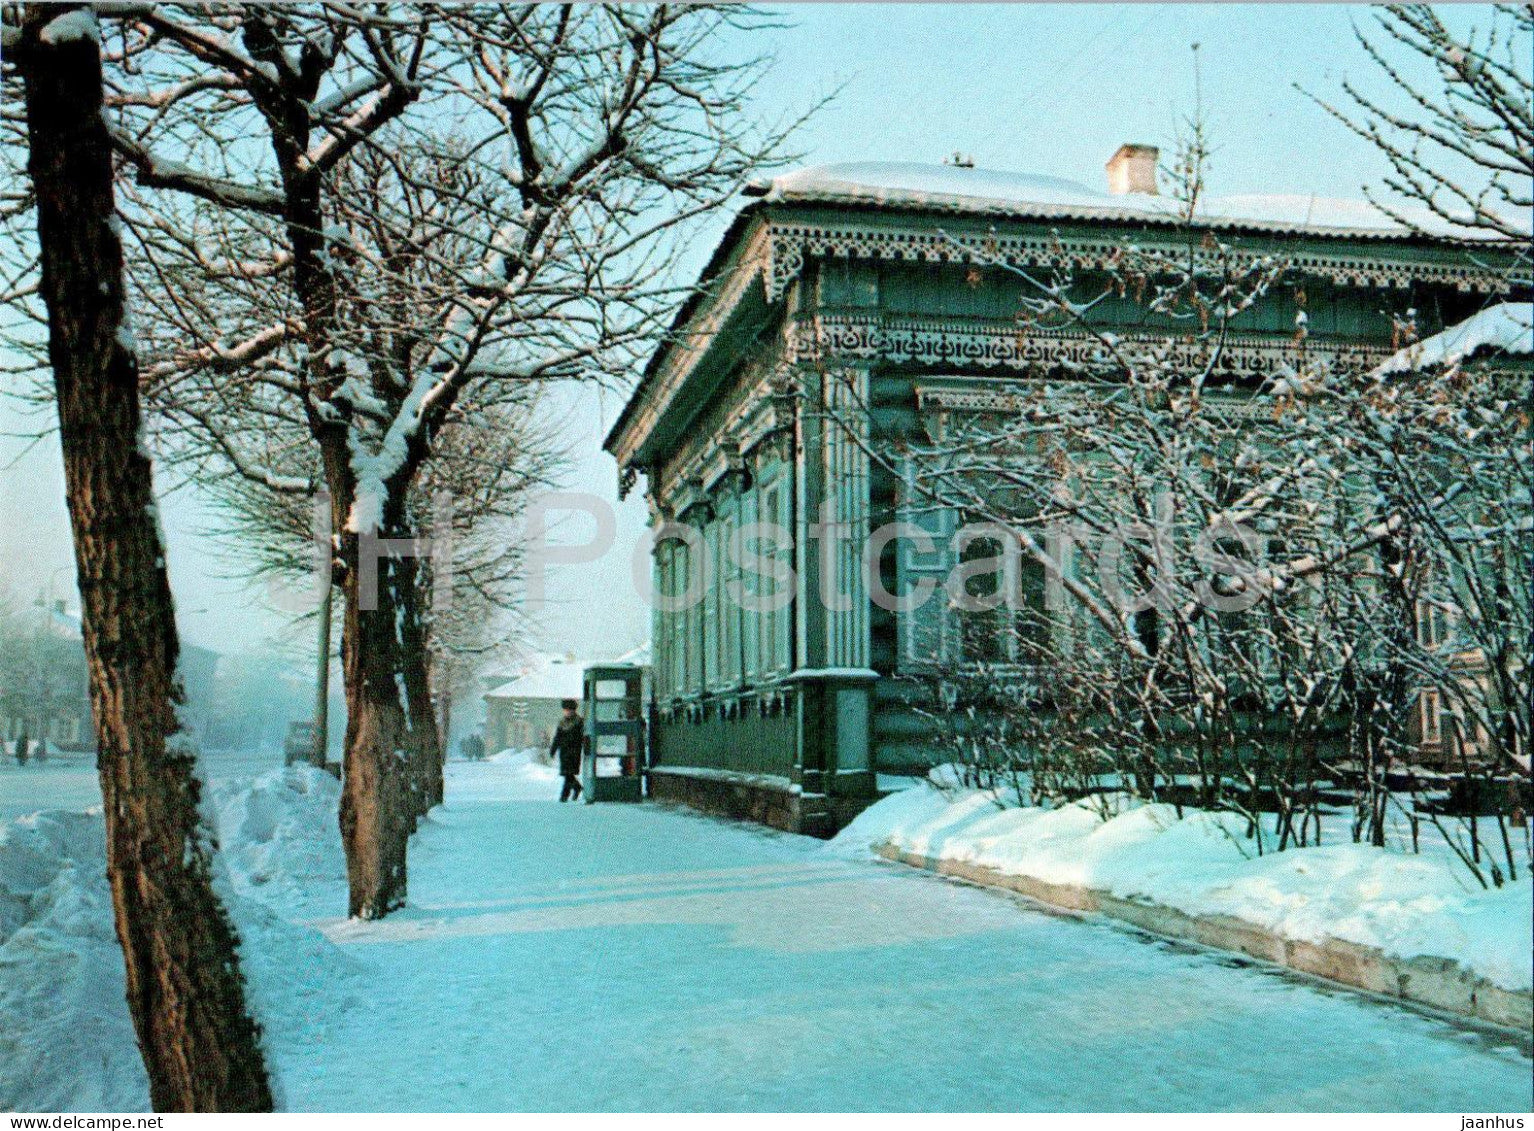 Irkutsk in Winter - Old House - Russia - unused - JH Postcards